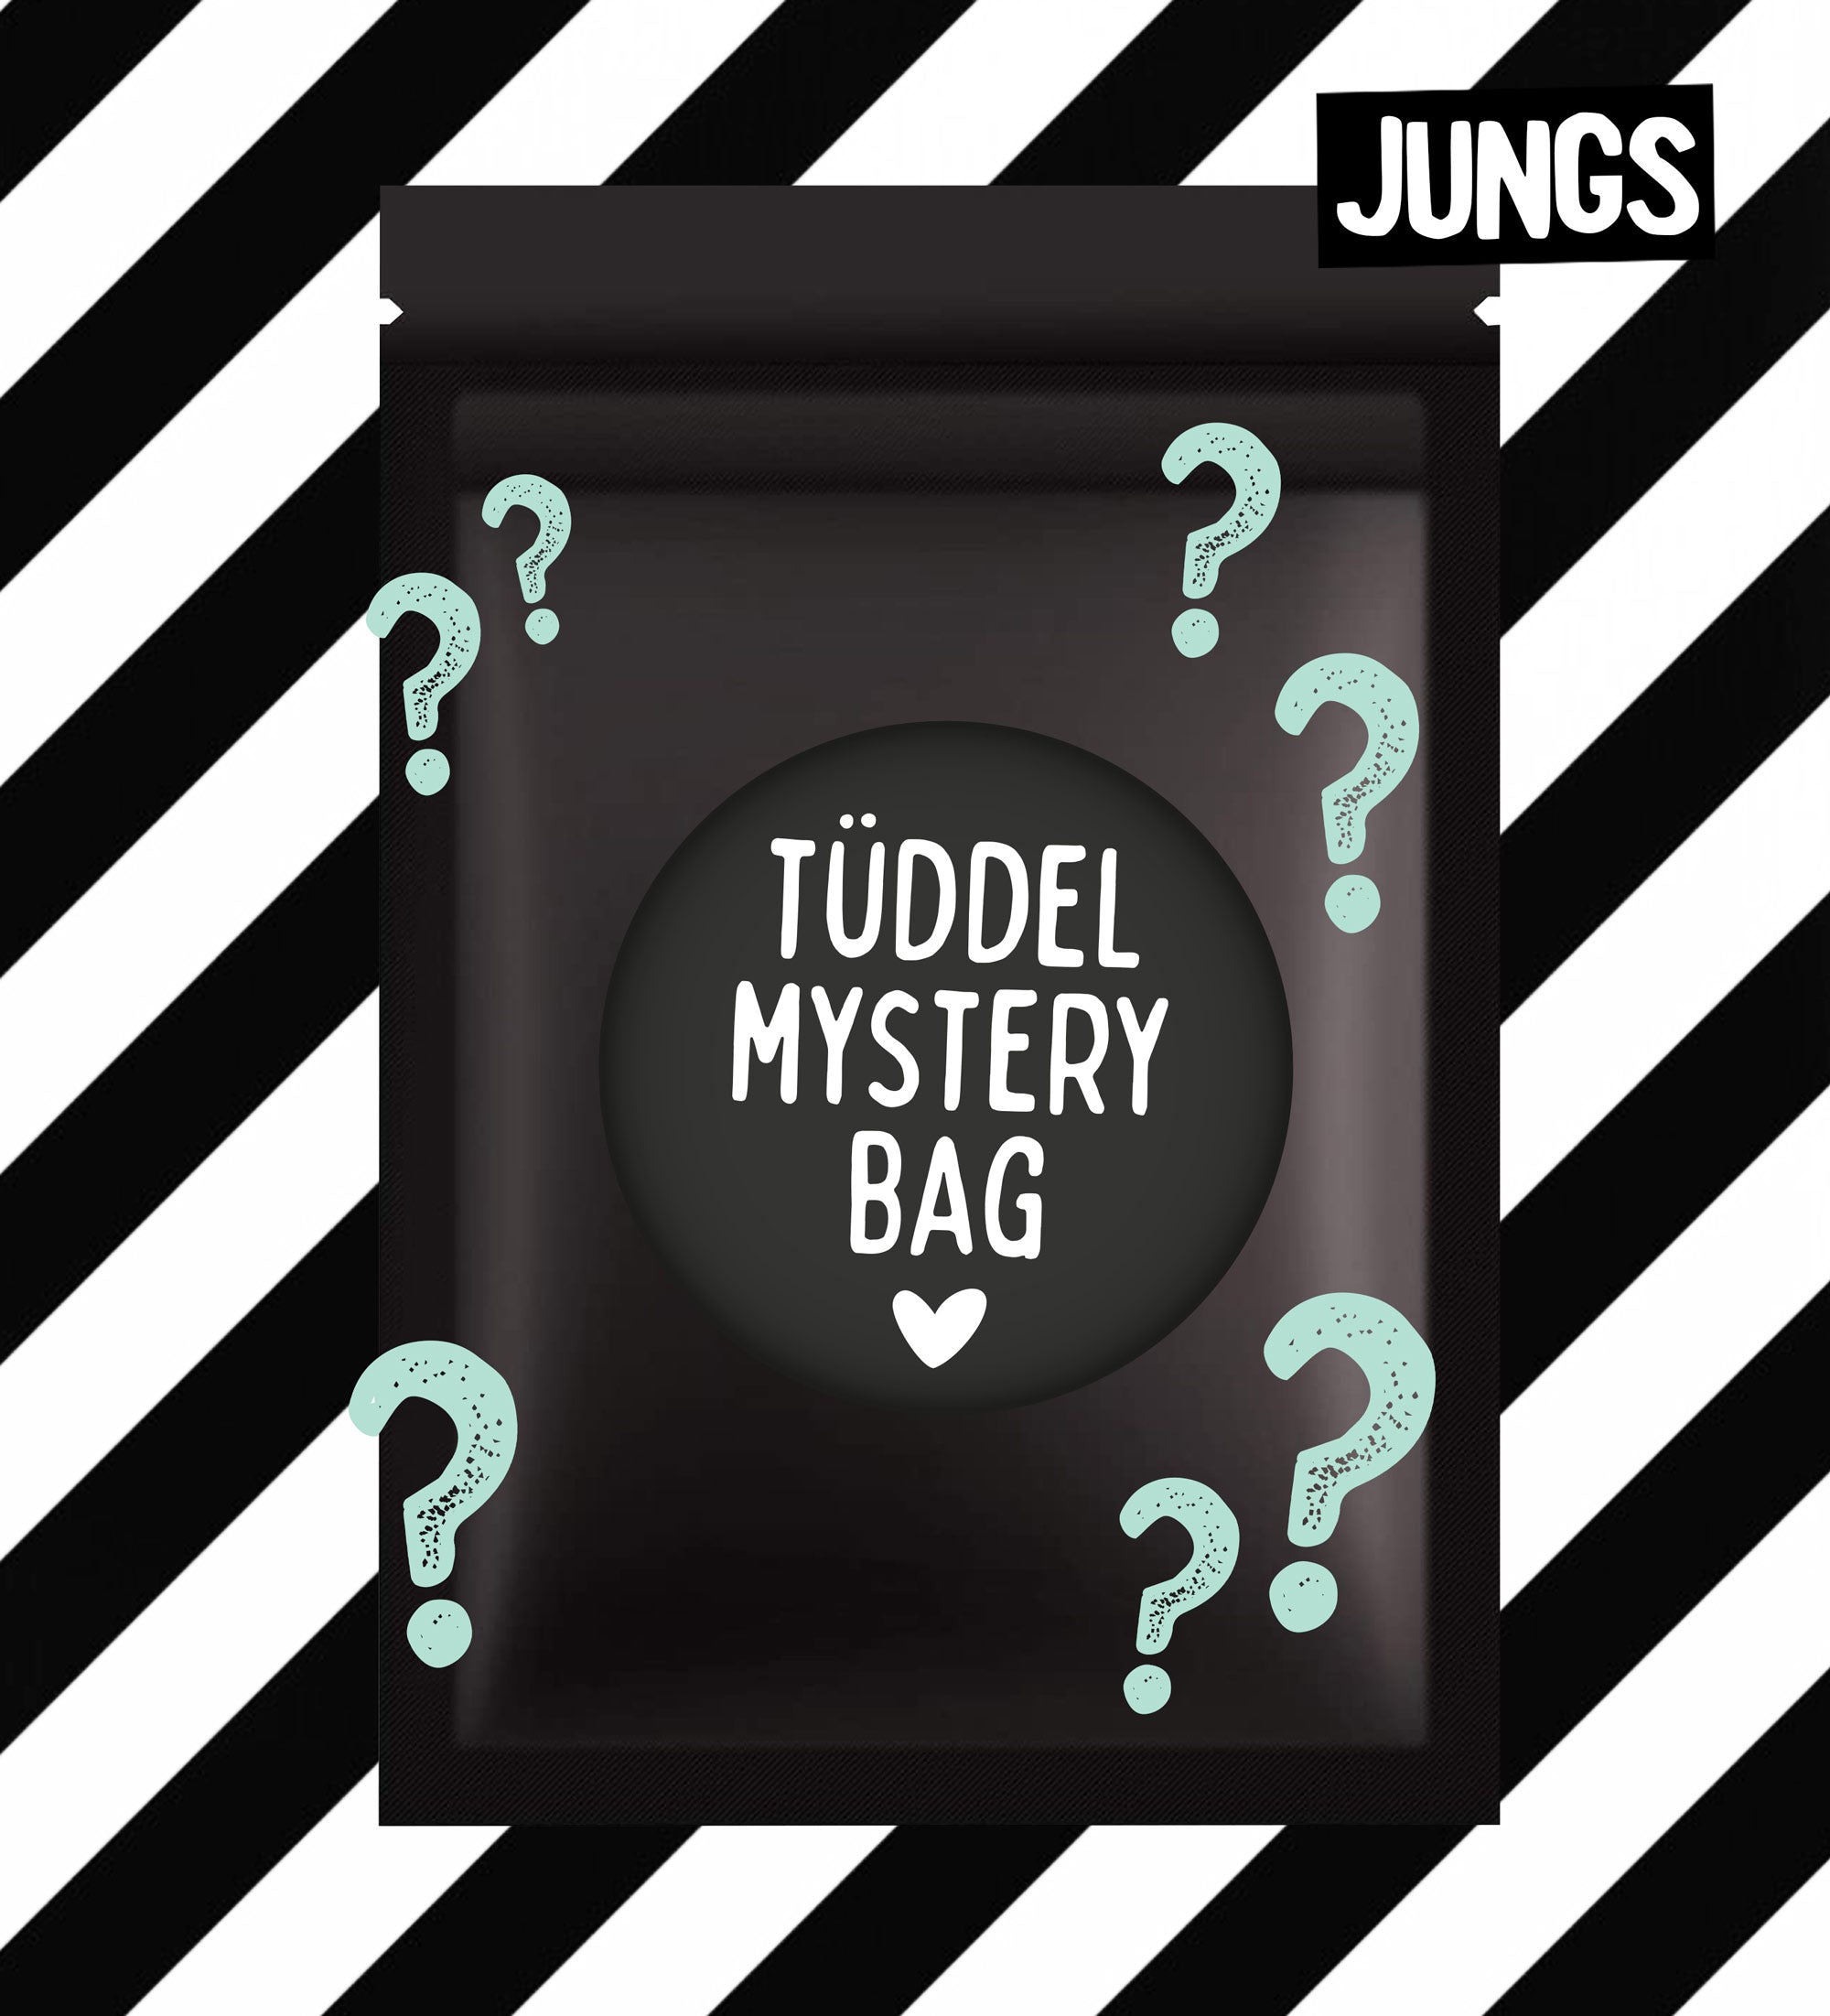 Tüddel Mystery Bag - Jungs *MAI*